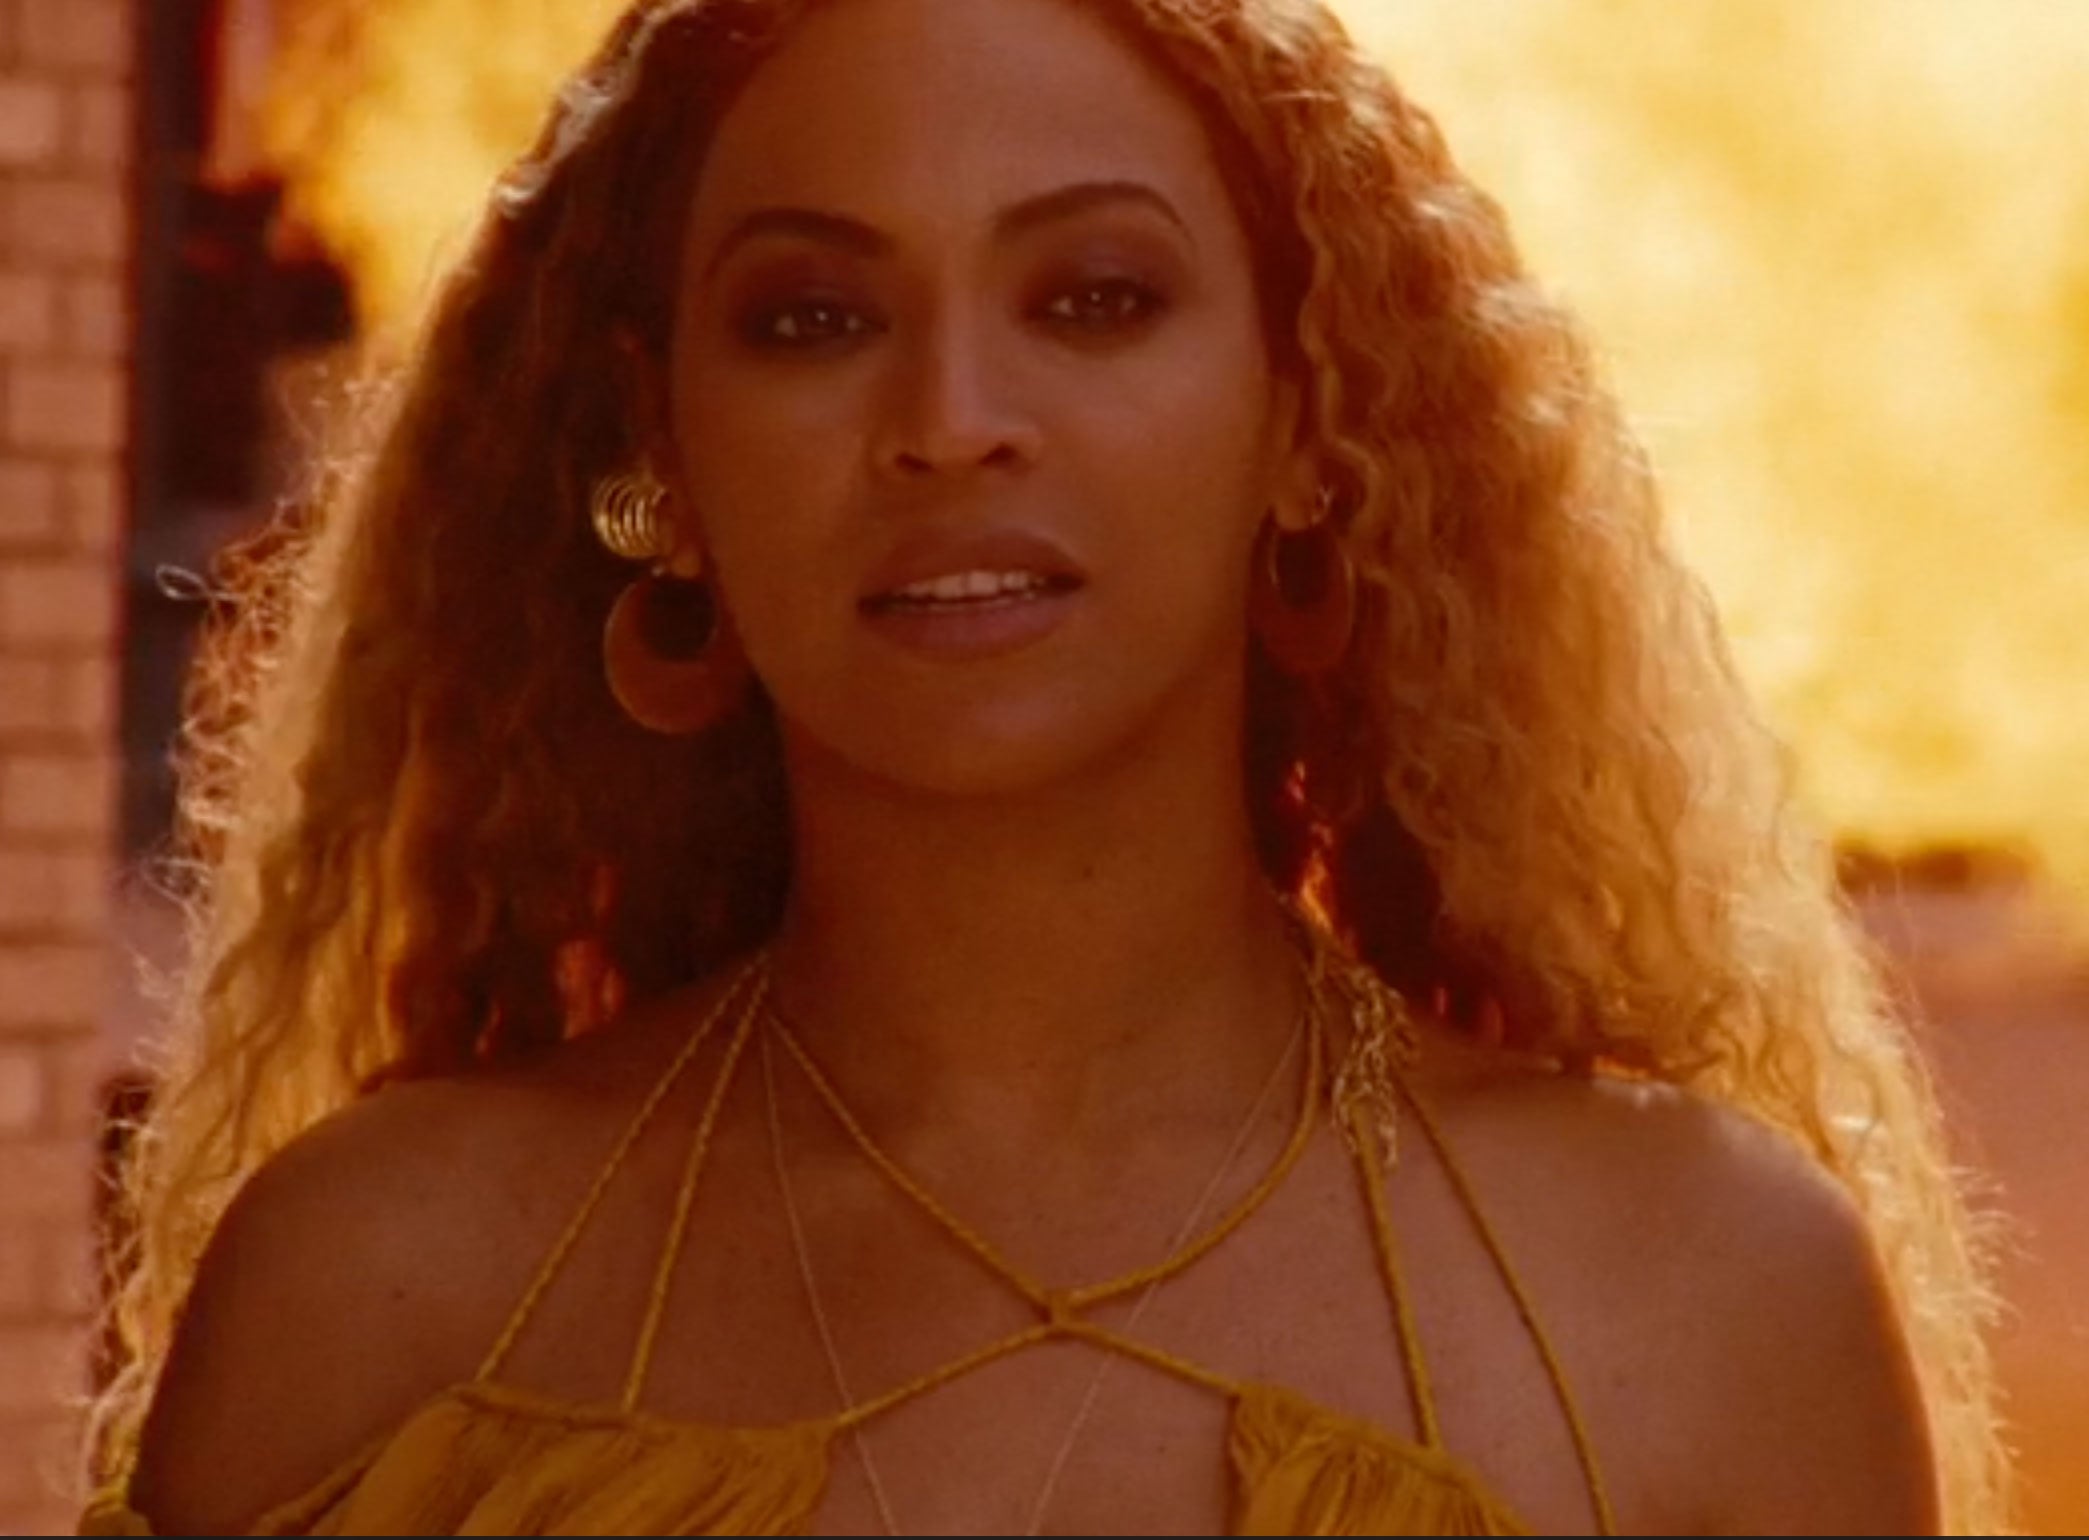 #LemonadeSyllabus: Black Women Are Sharing Reading Lists Inspired By Beyoncé's Visual Album
